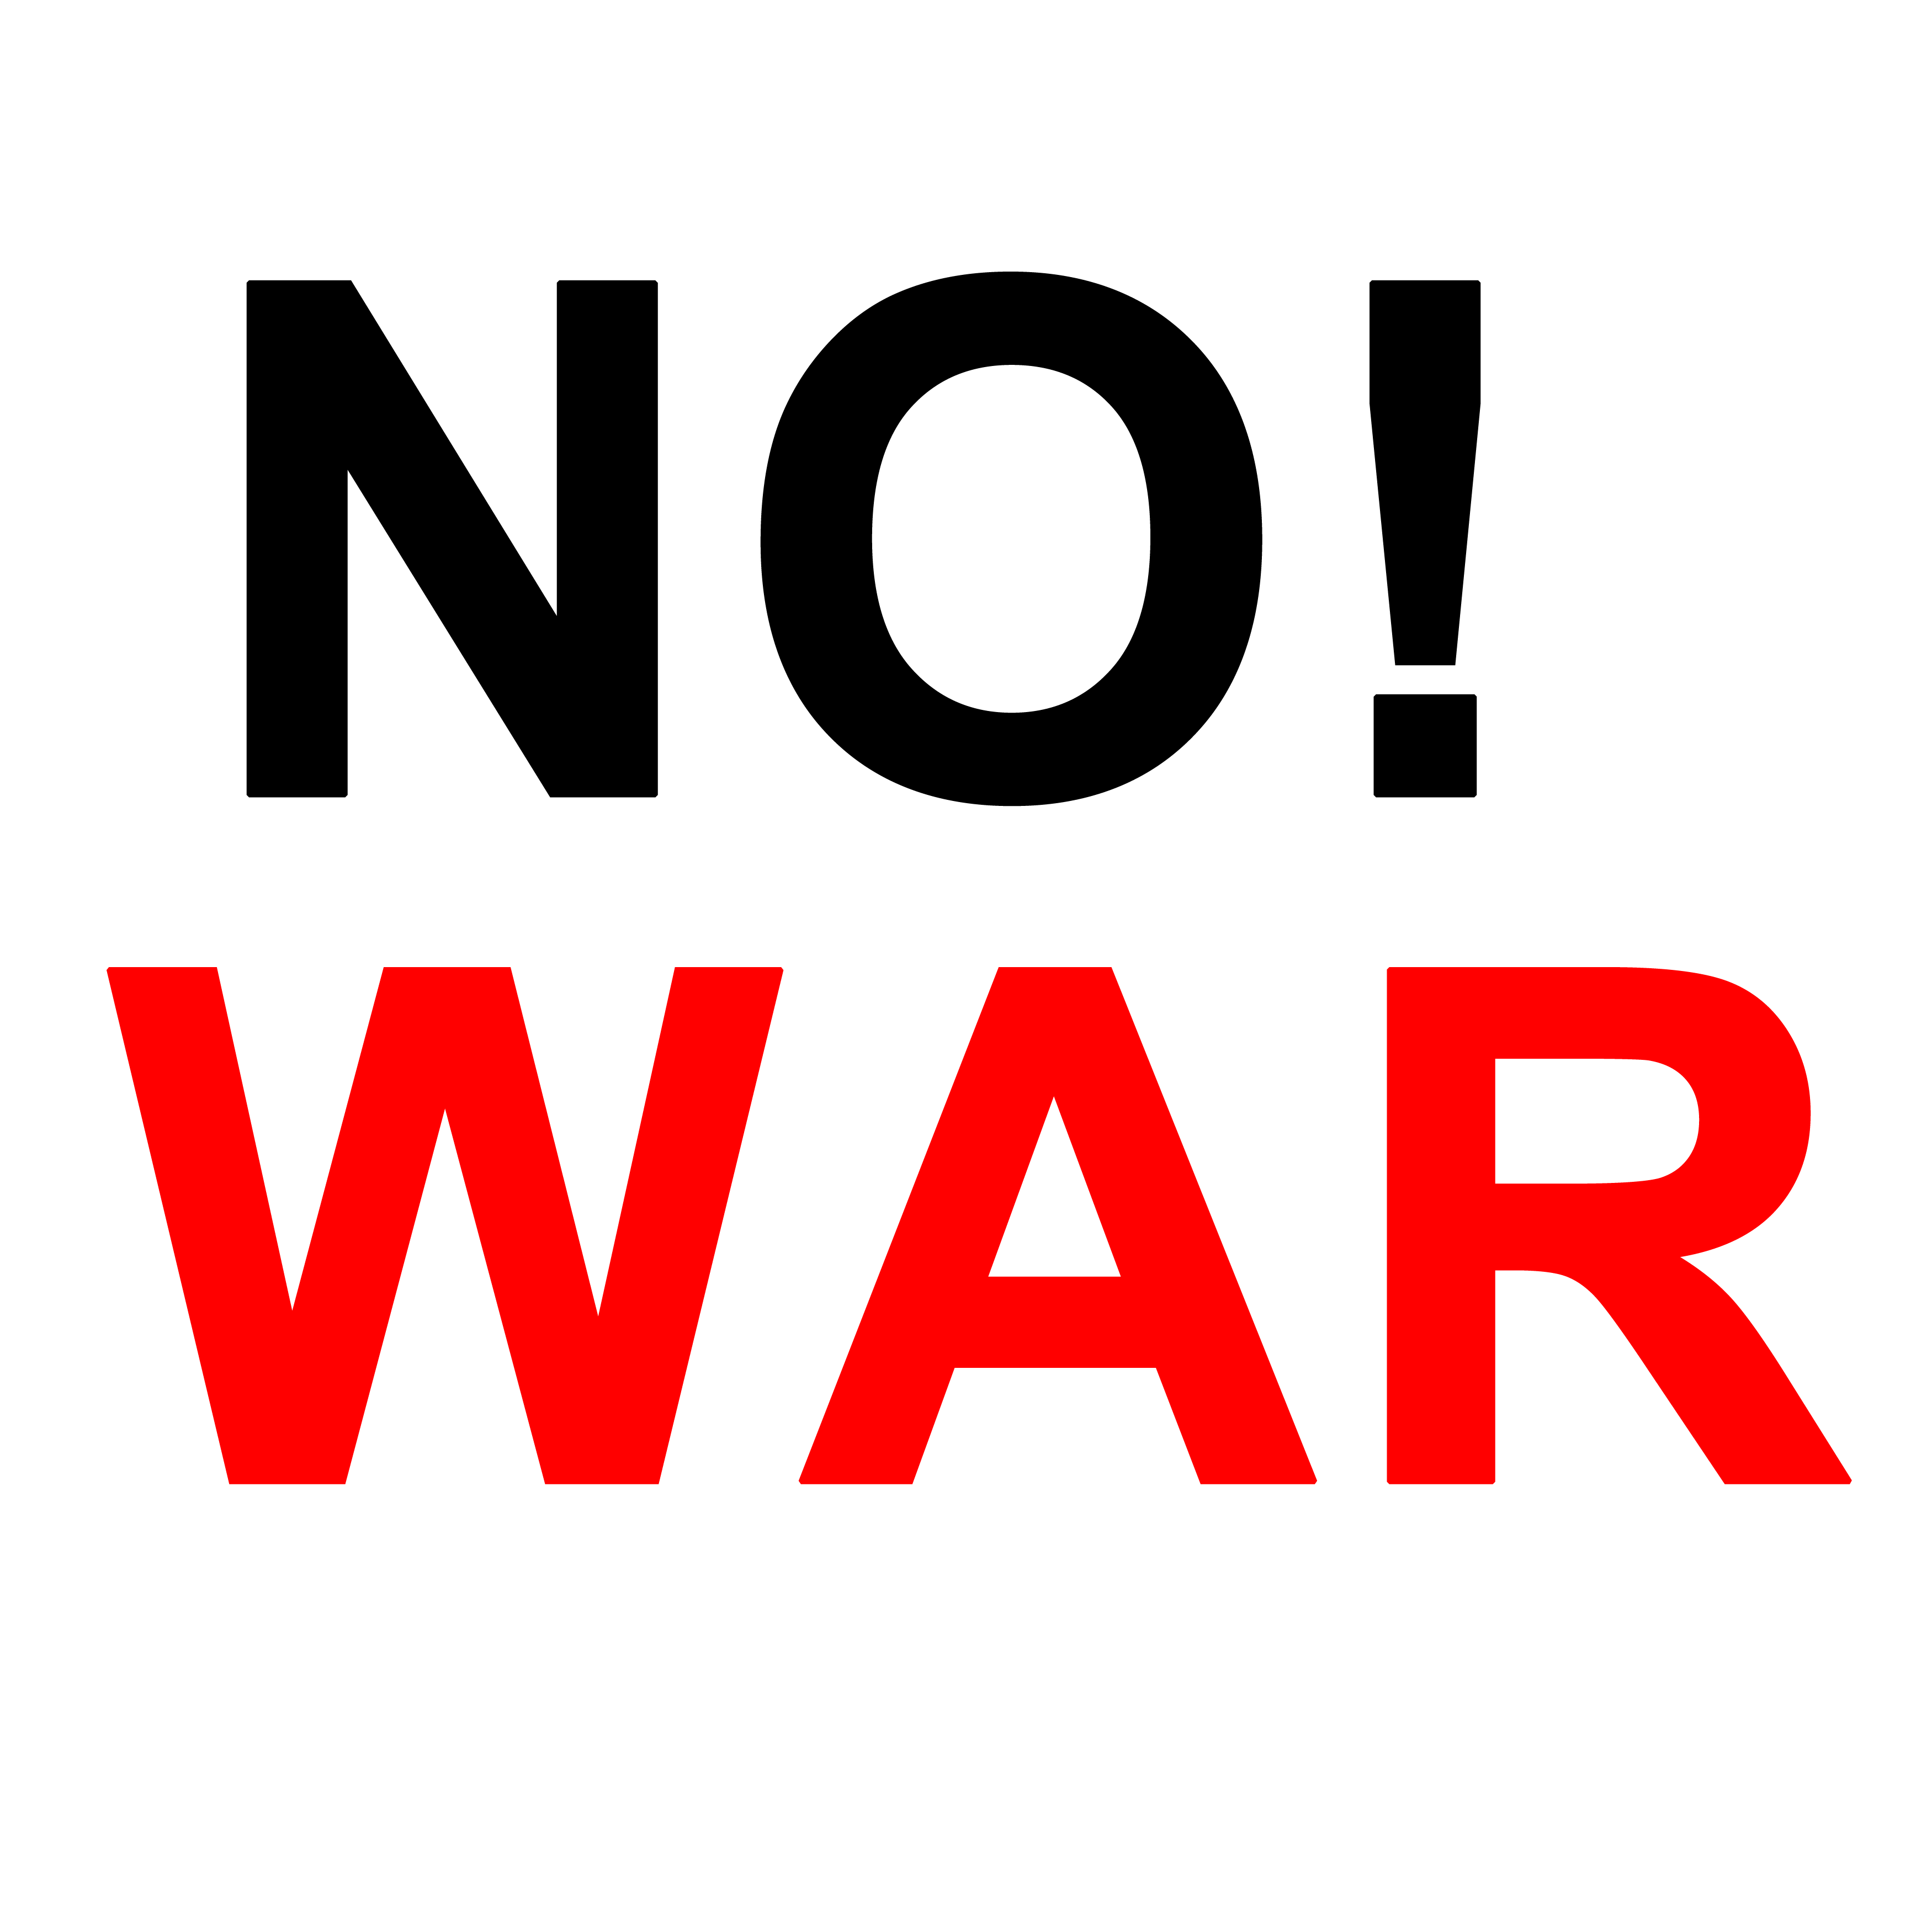 No war PNG надпись